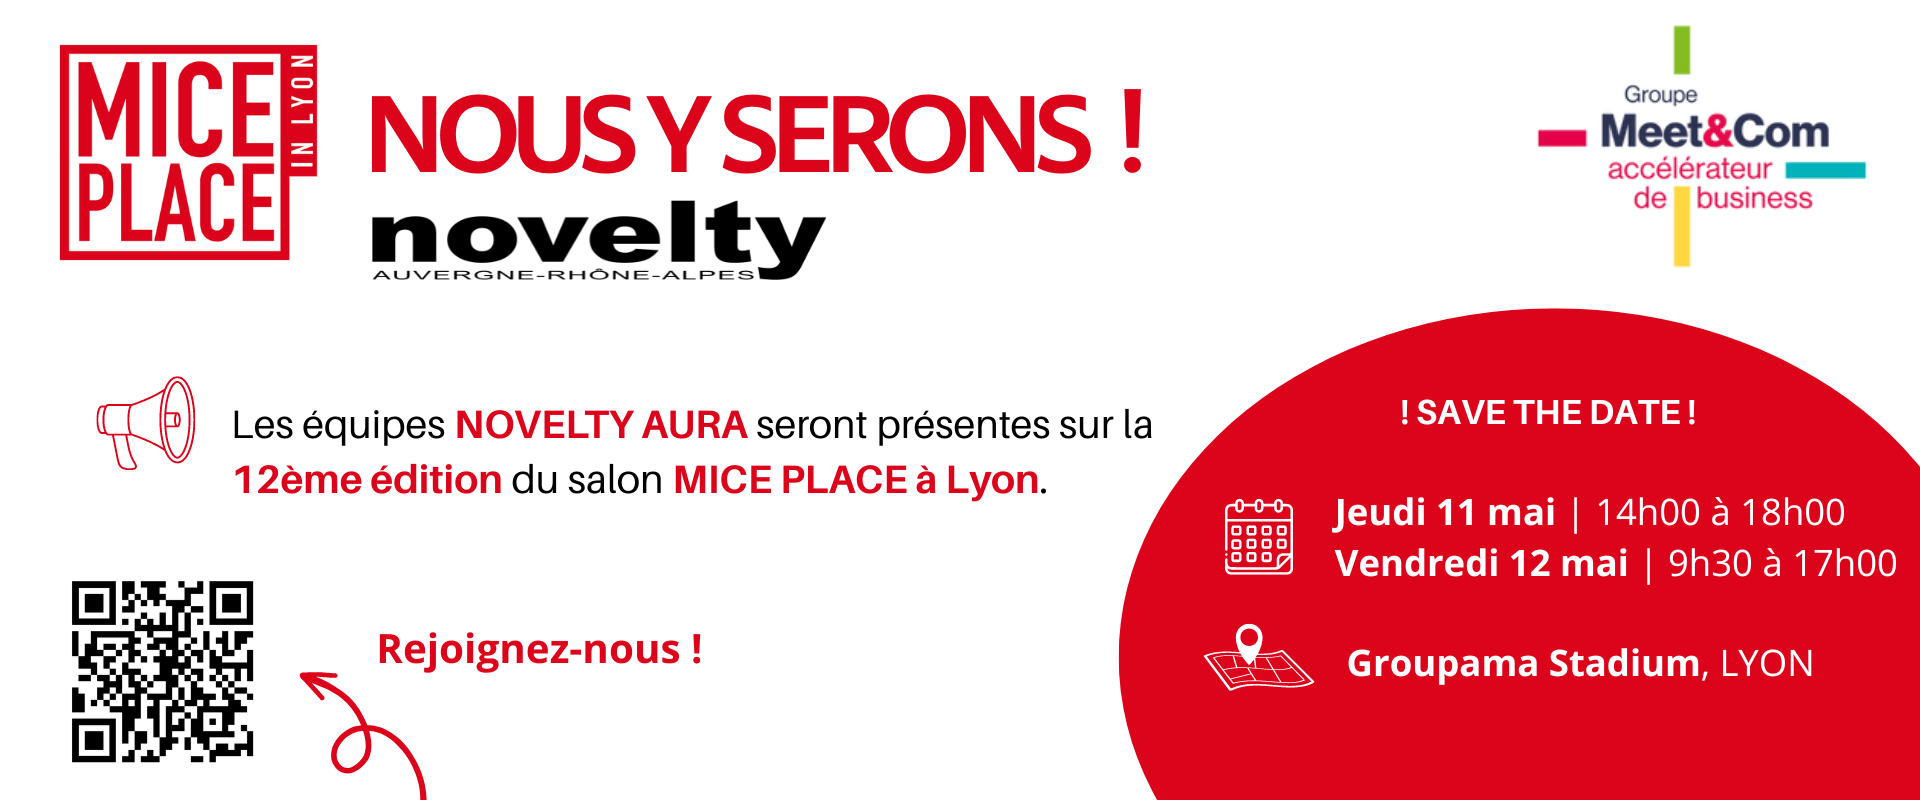 Visuel Novelty sera présent au MICE PLACE Lyon